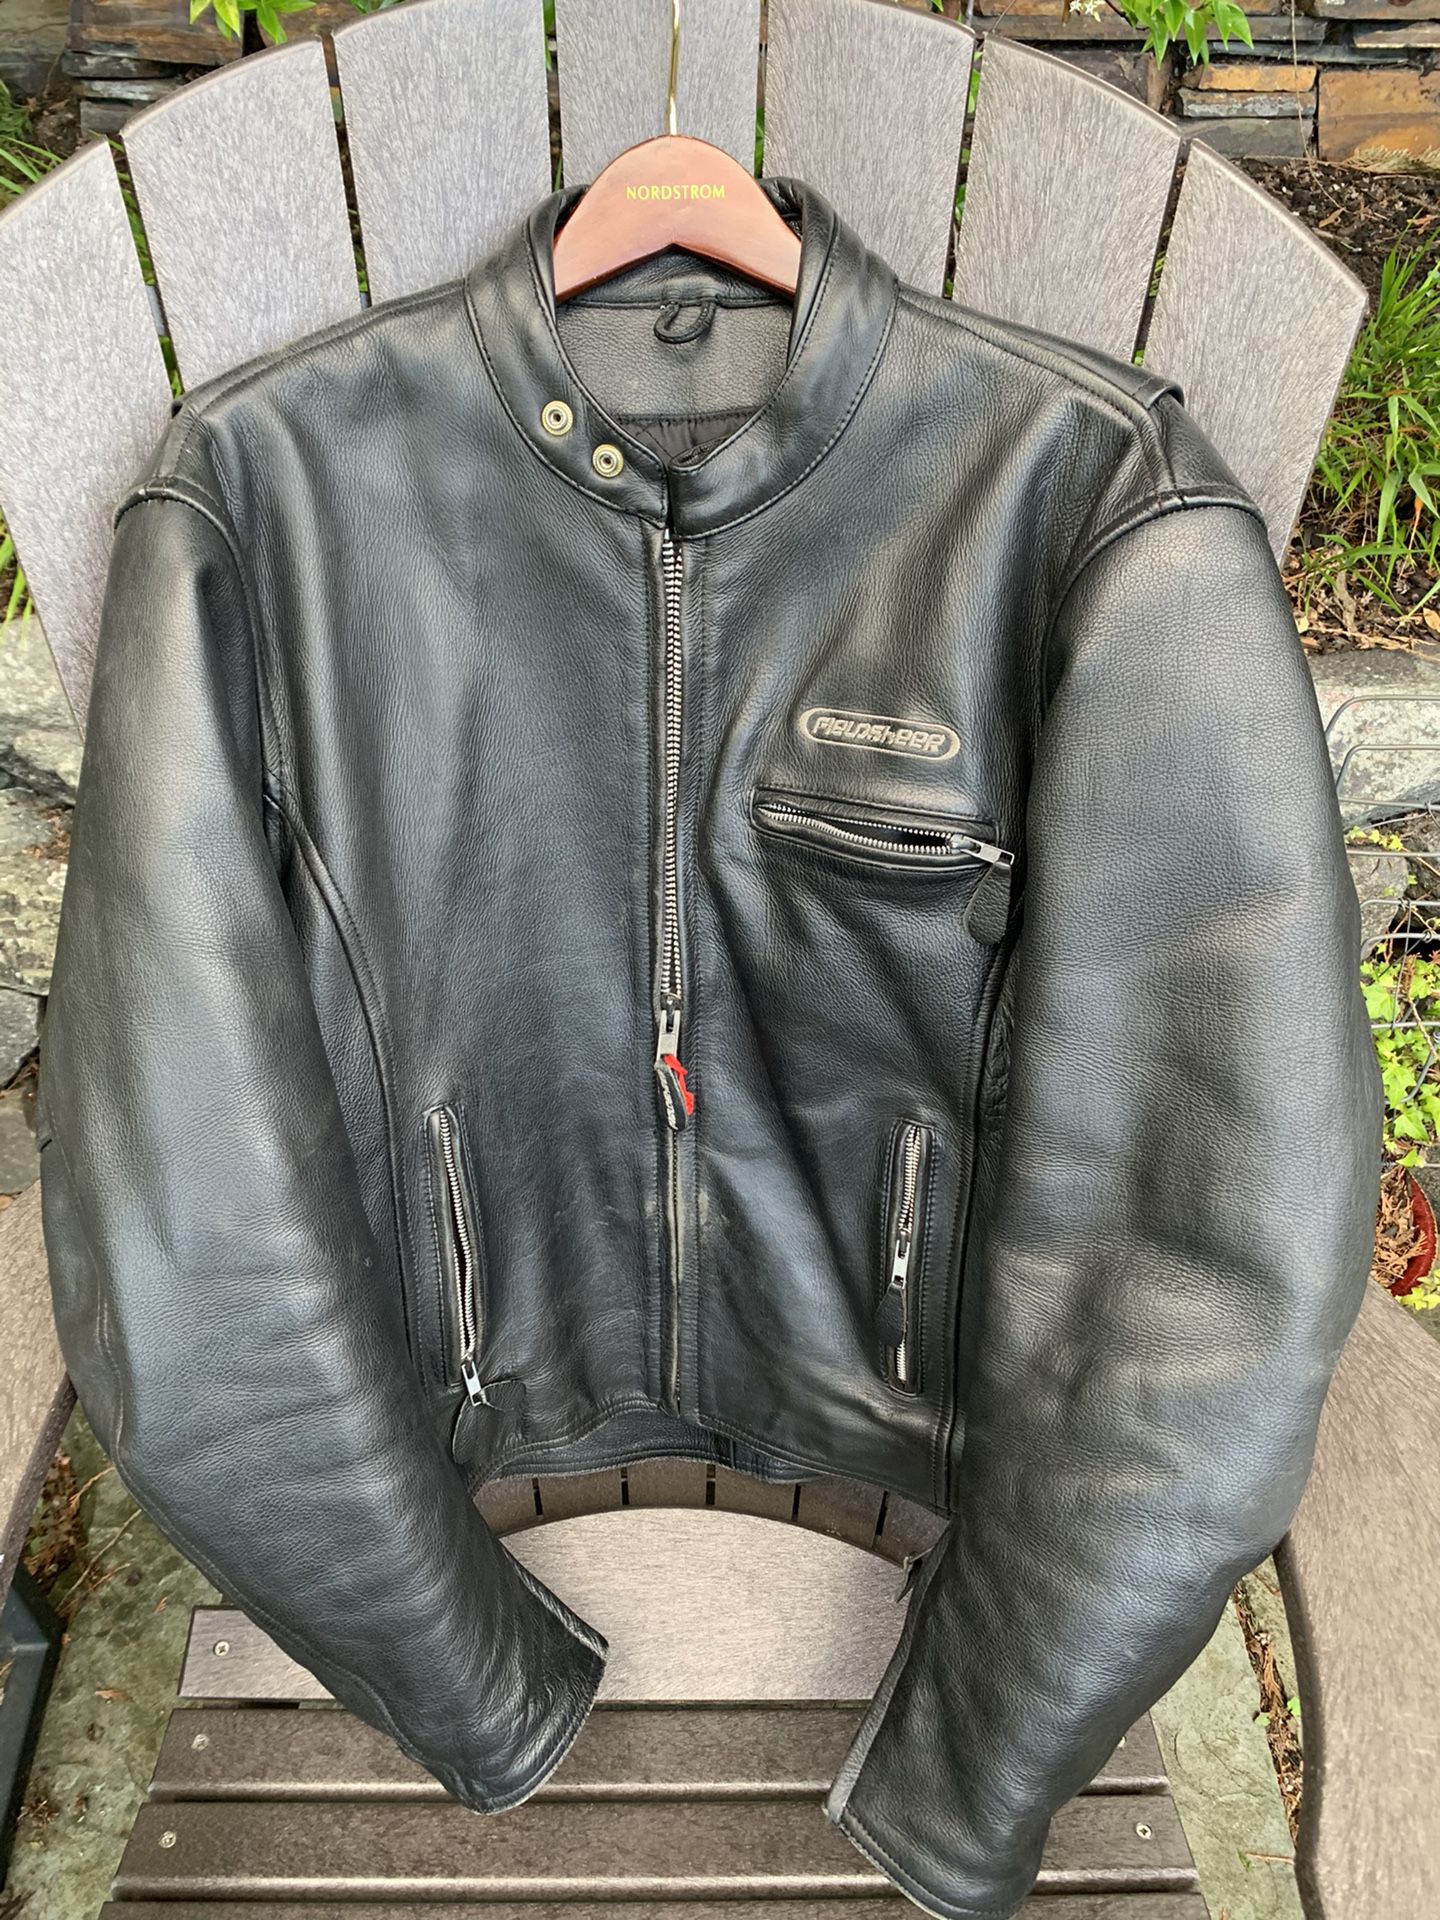 Field sheer Motorcycle Jacket with Armor - Men’s sz 44